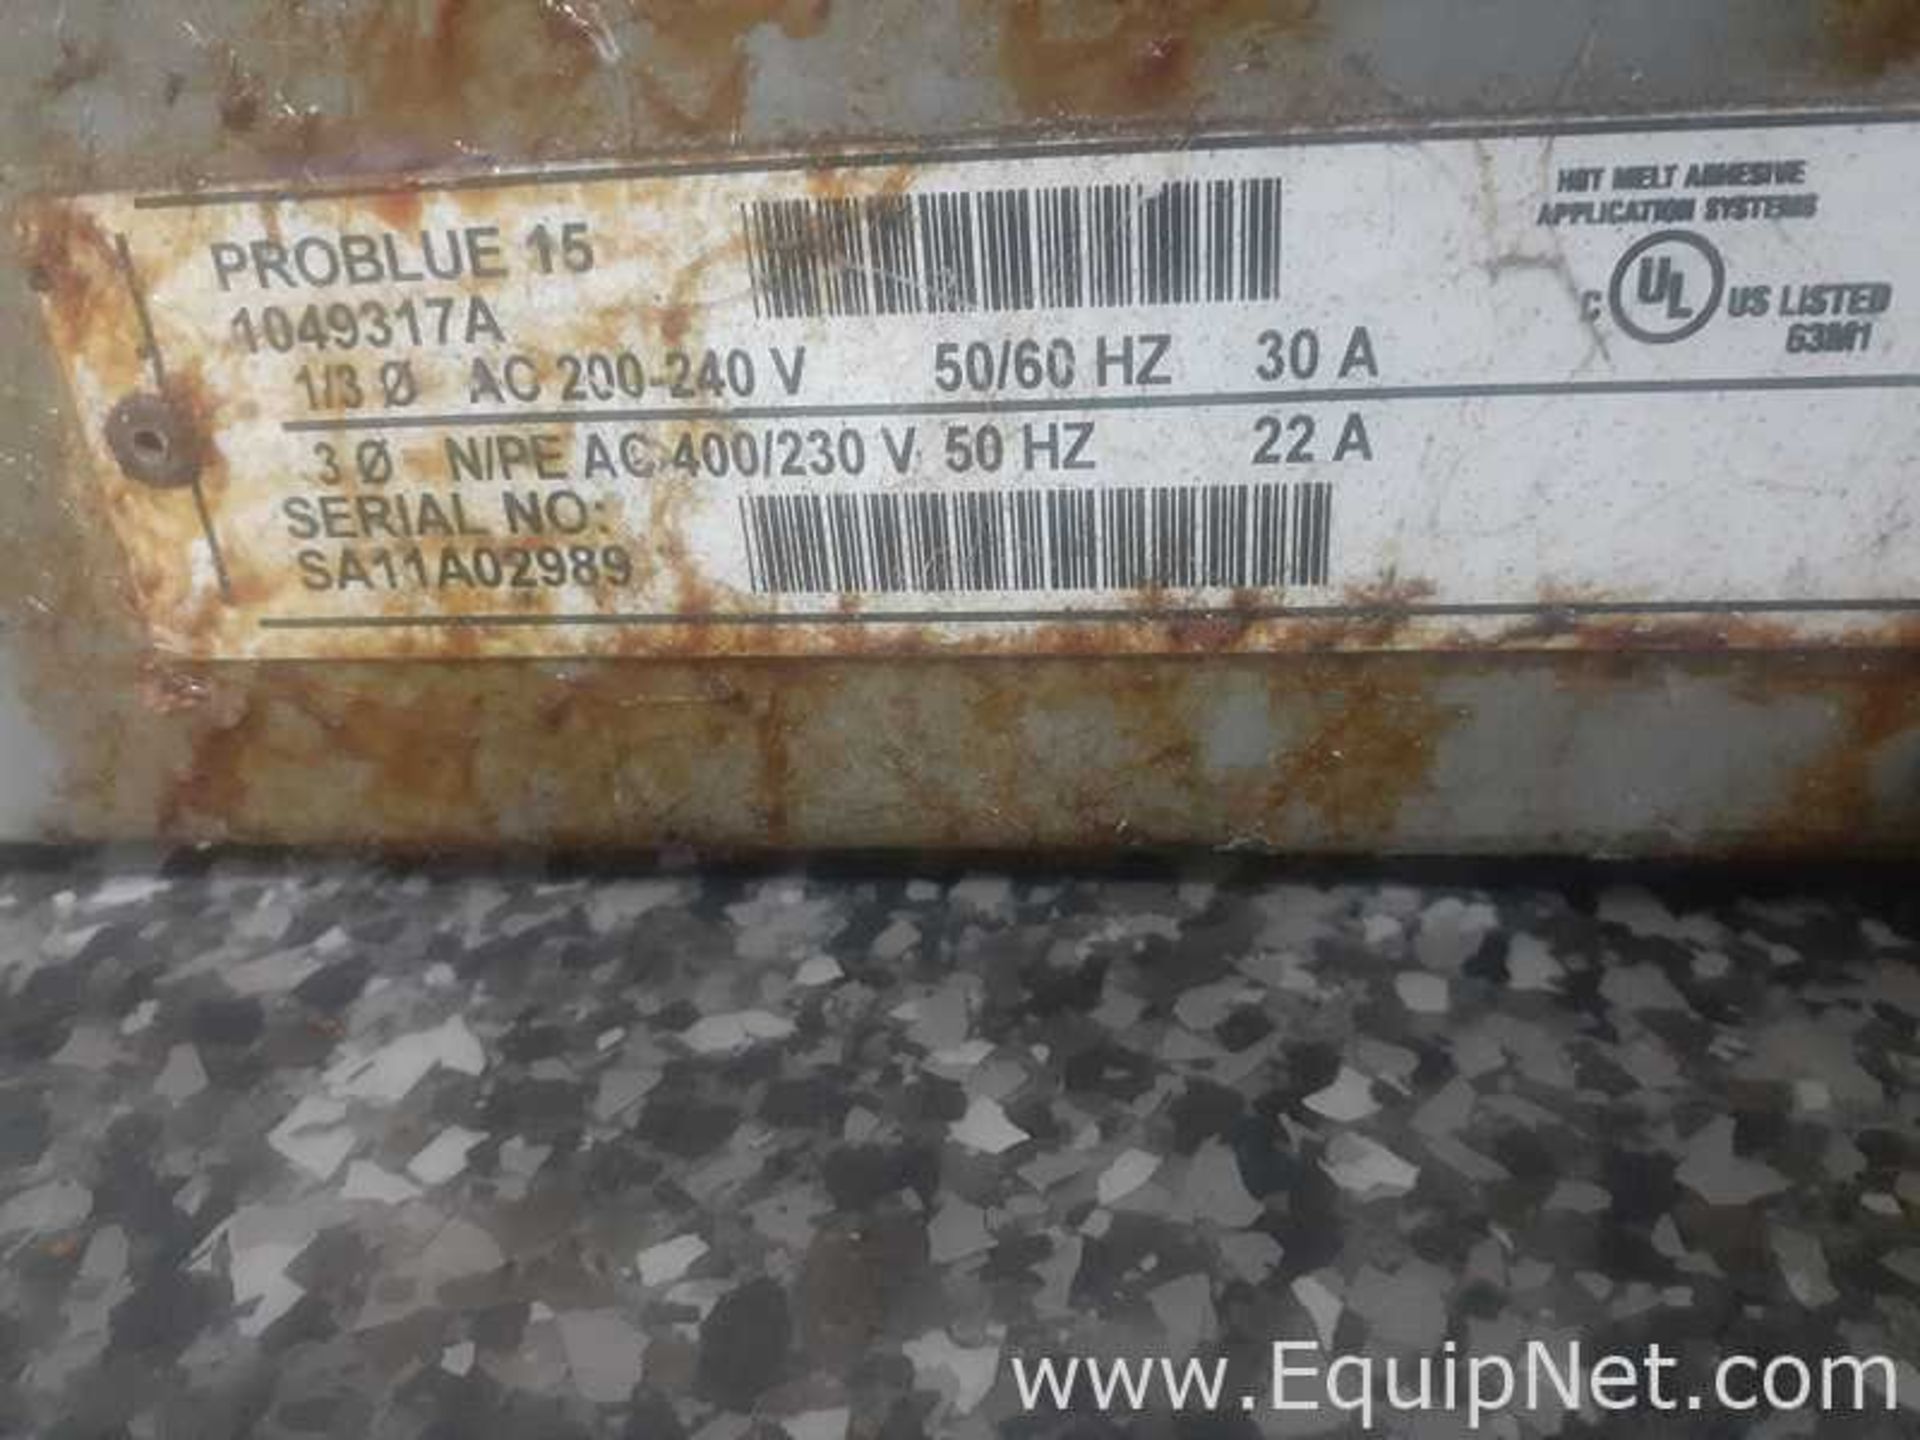 DESCRIPTION: Lot of 3 - Nordson ProBlue 15 Hotmelt Hot Glue Injection MachinesCustomer reports - Image 15 of 16